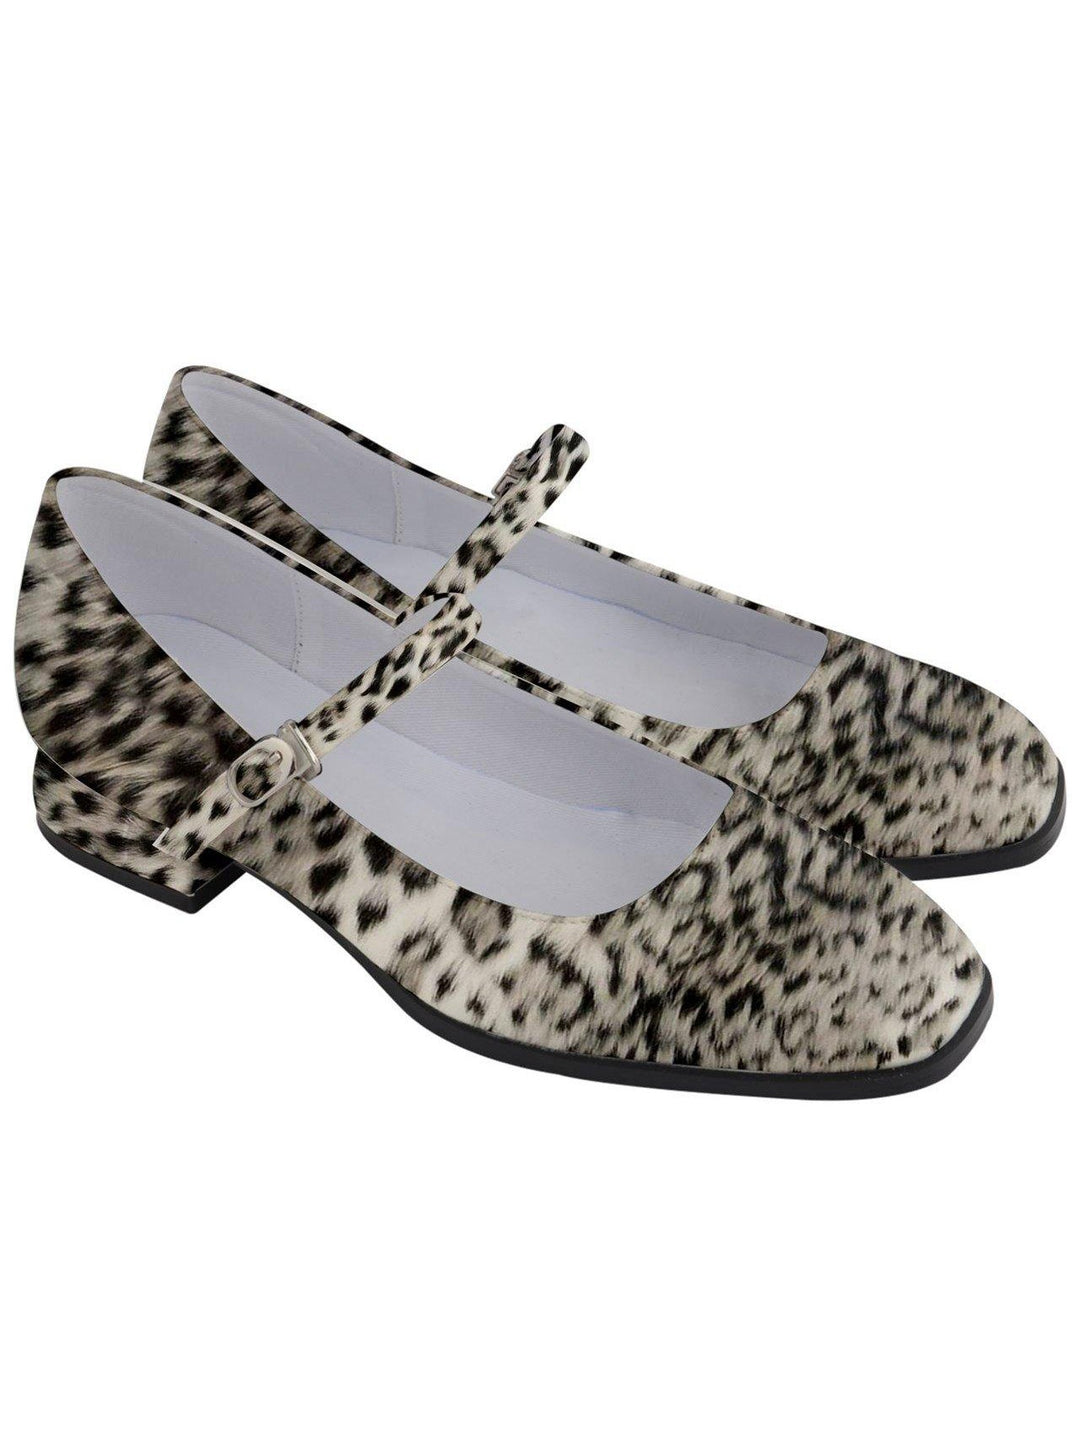 Streetwalkin' Cheetah Women's Mary Jane Shoes Size 8.5